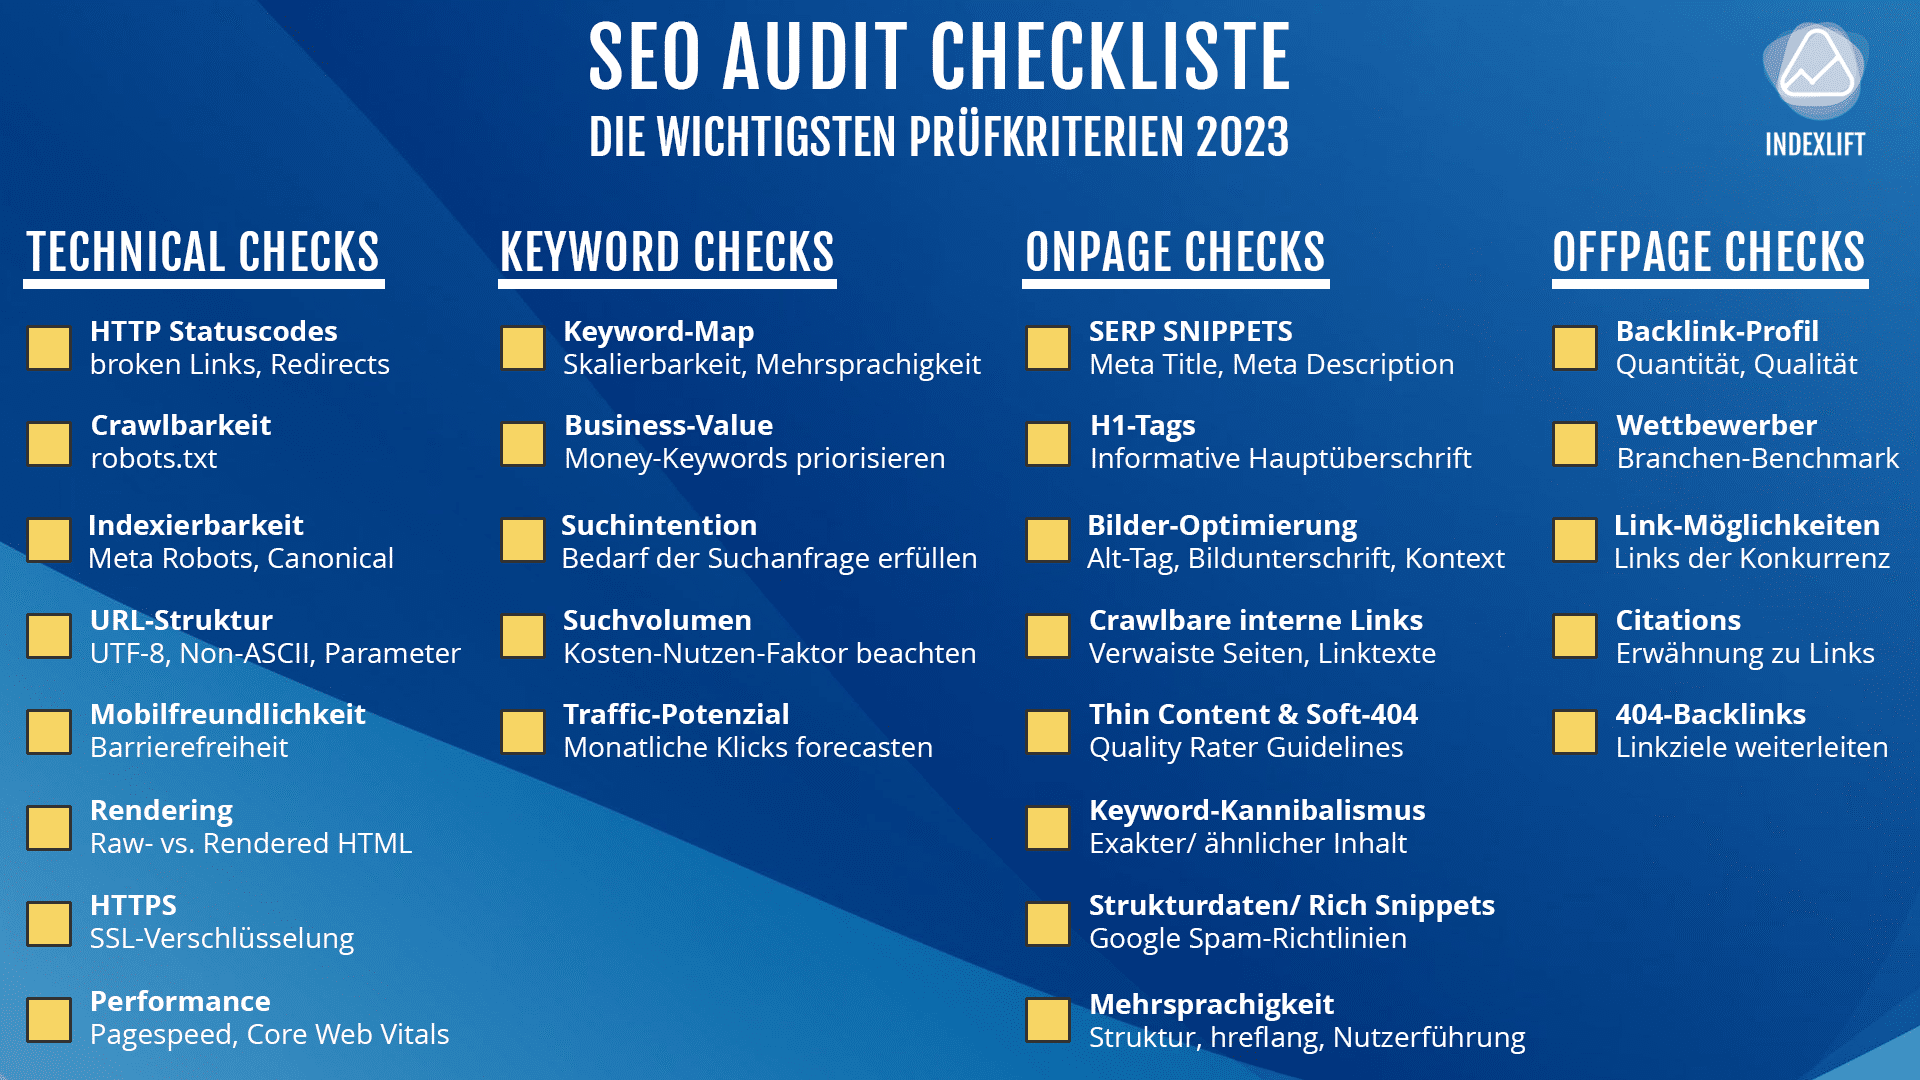 SEO Audit Checkliste 2023 © Indexlift